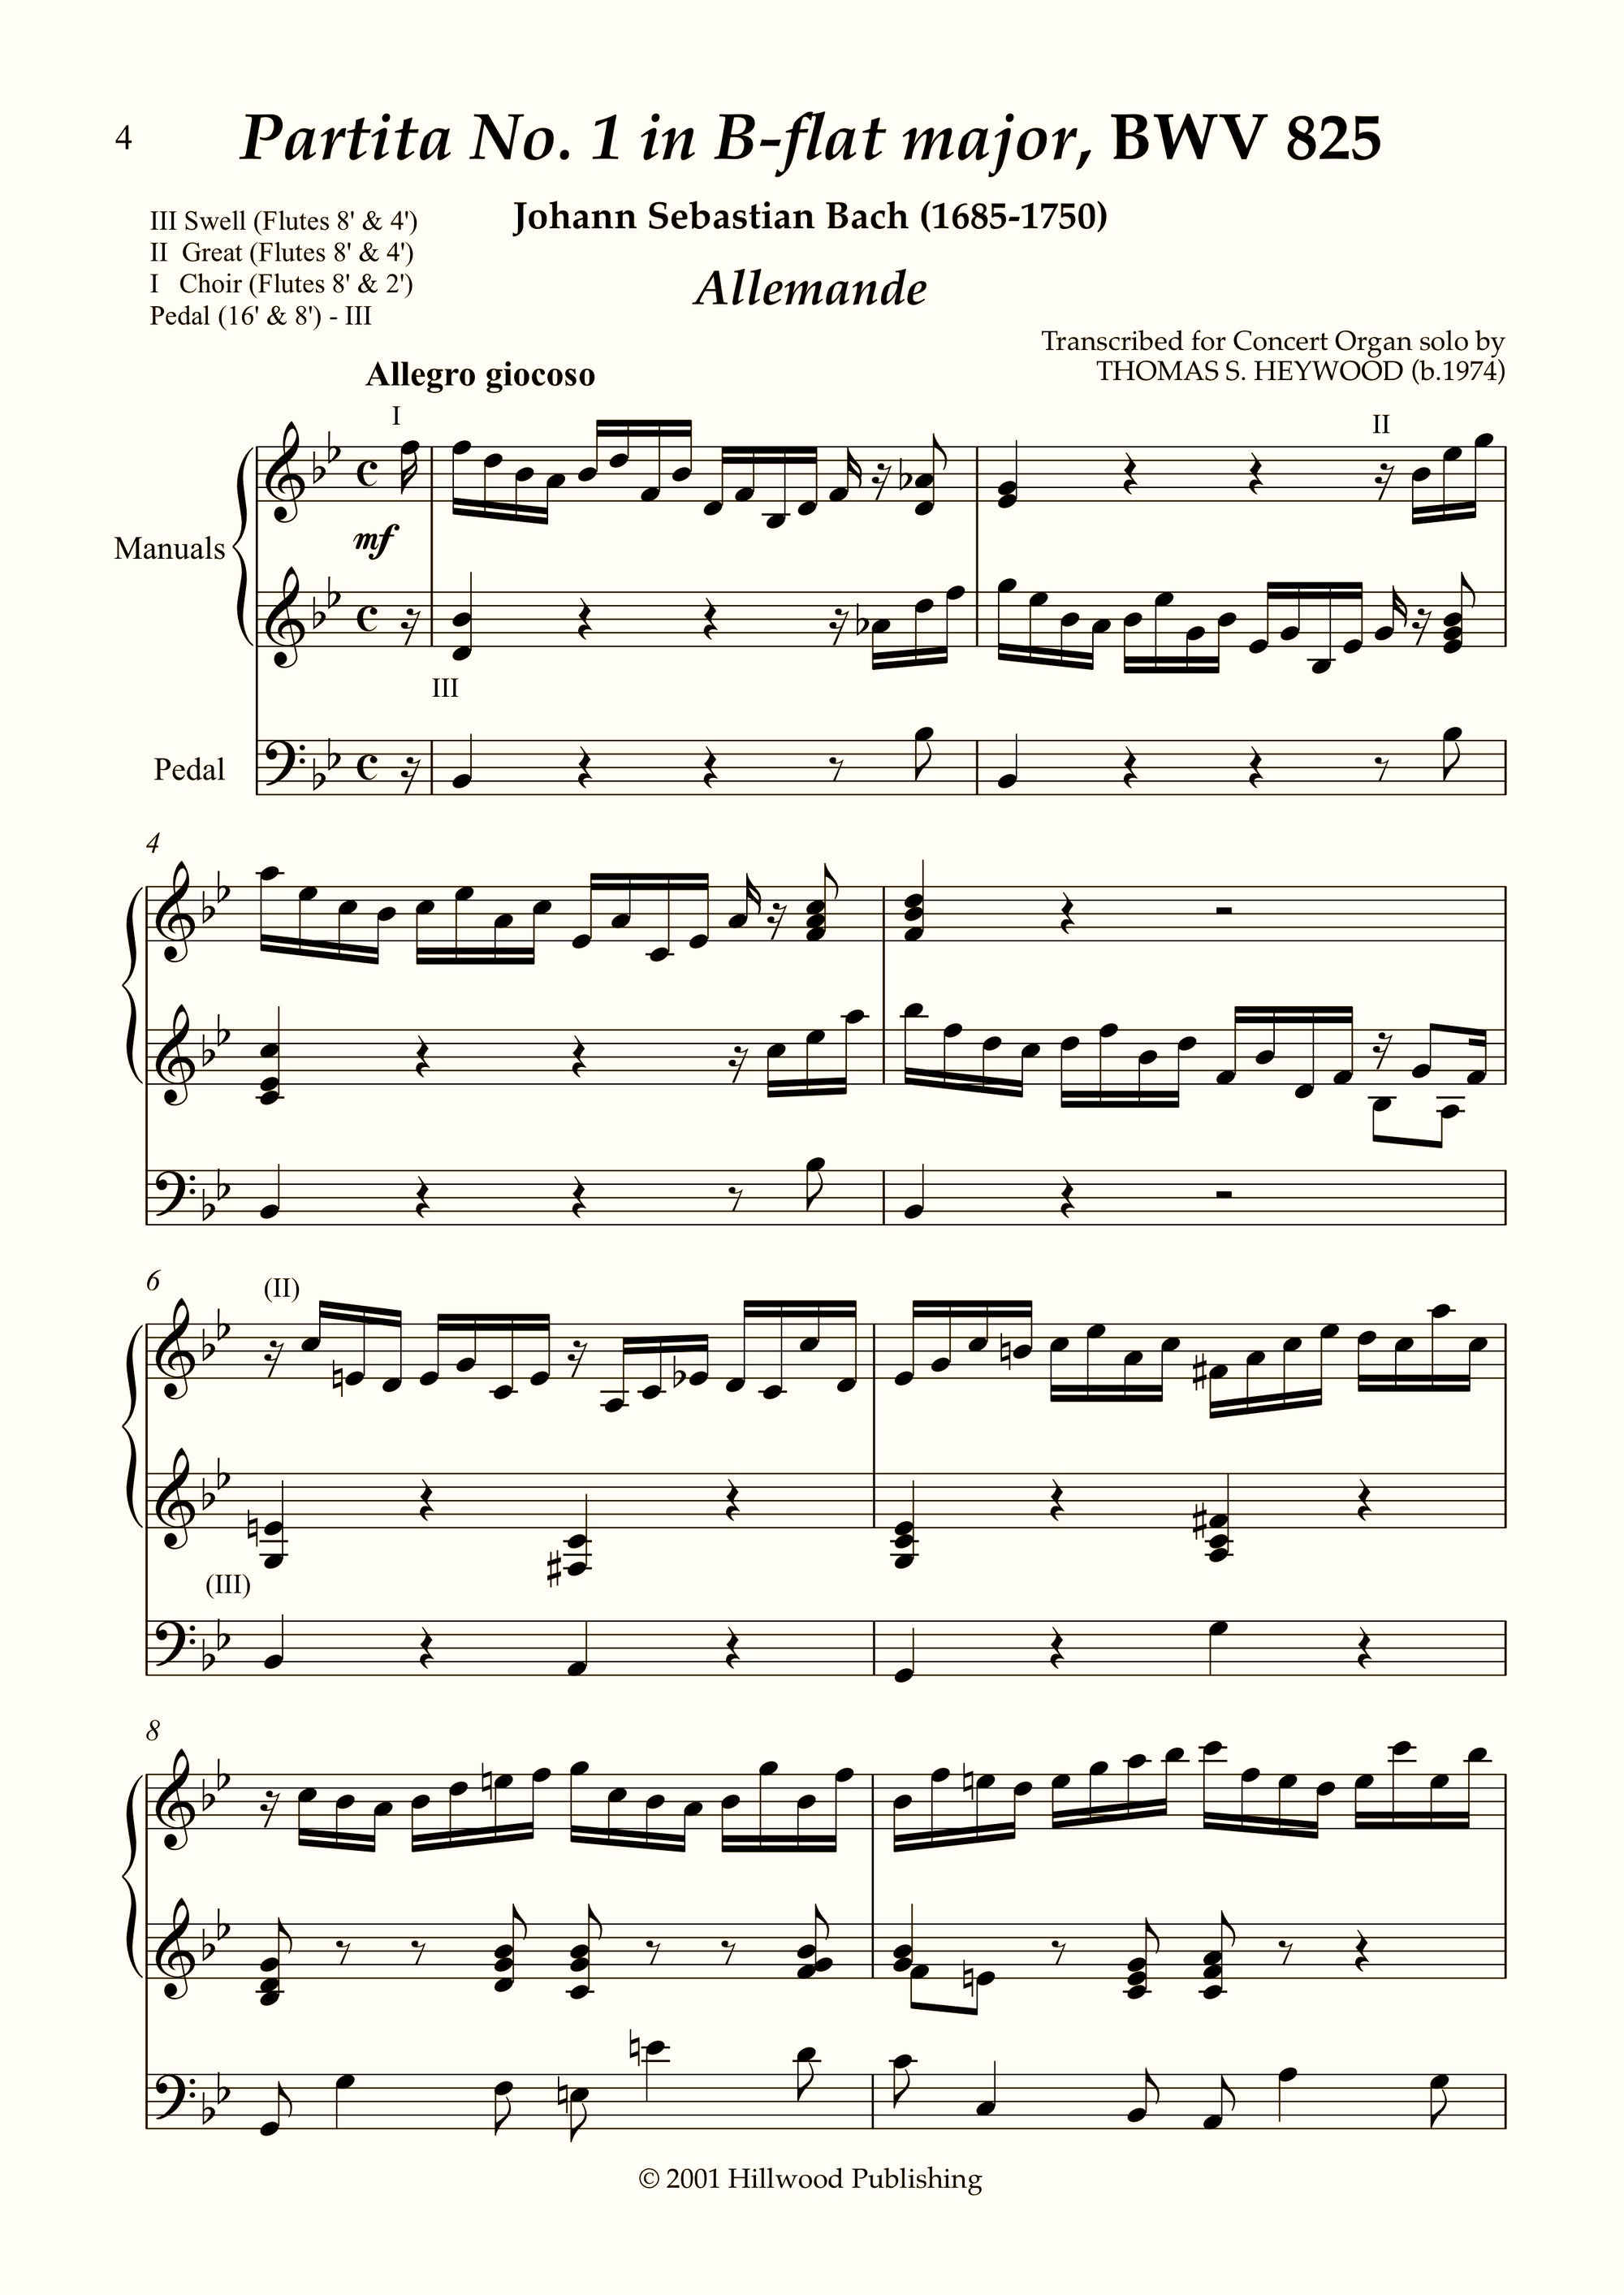 Bach/Heywood - Allemande from Partita No. 1 in B-flat major, BWV 825 (Score) | Thomas Heywood | Concert Organ International